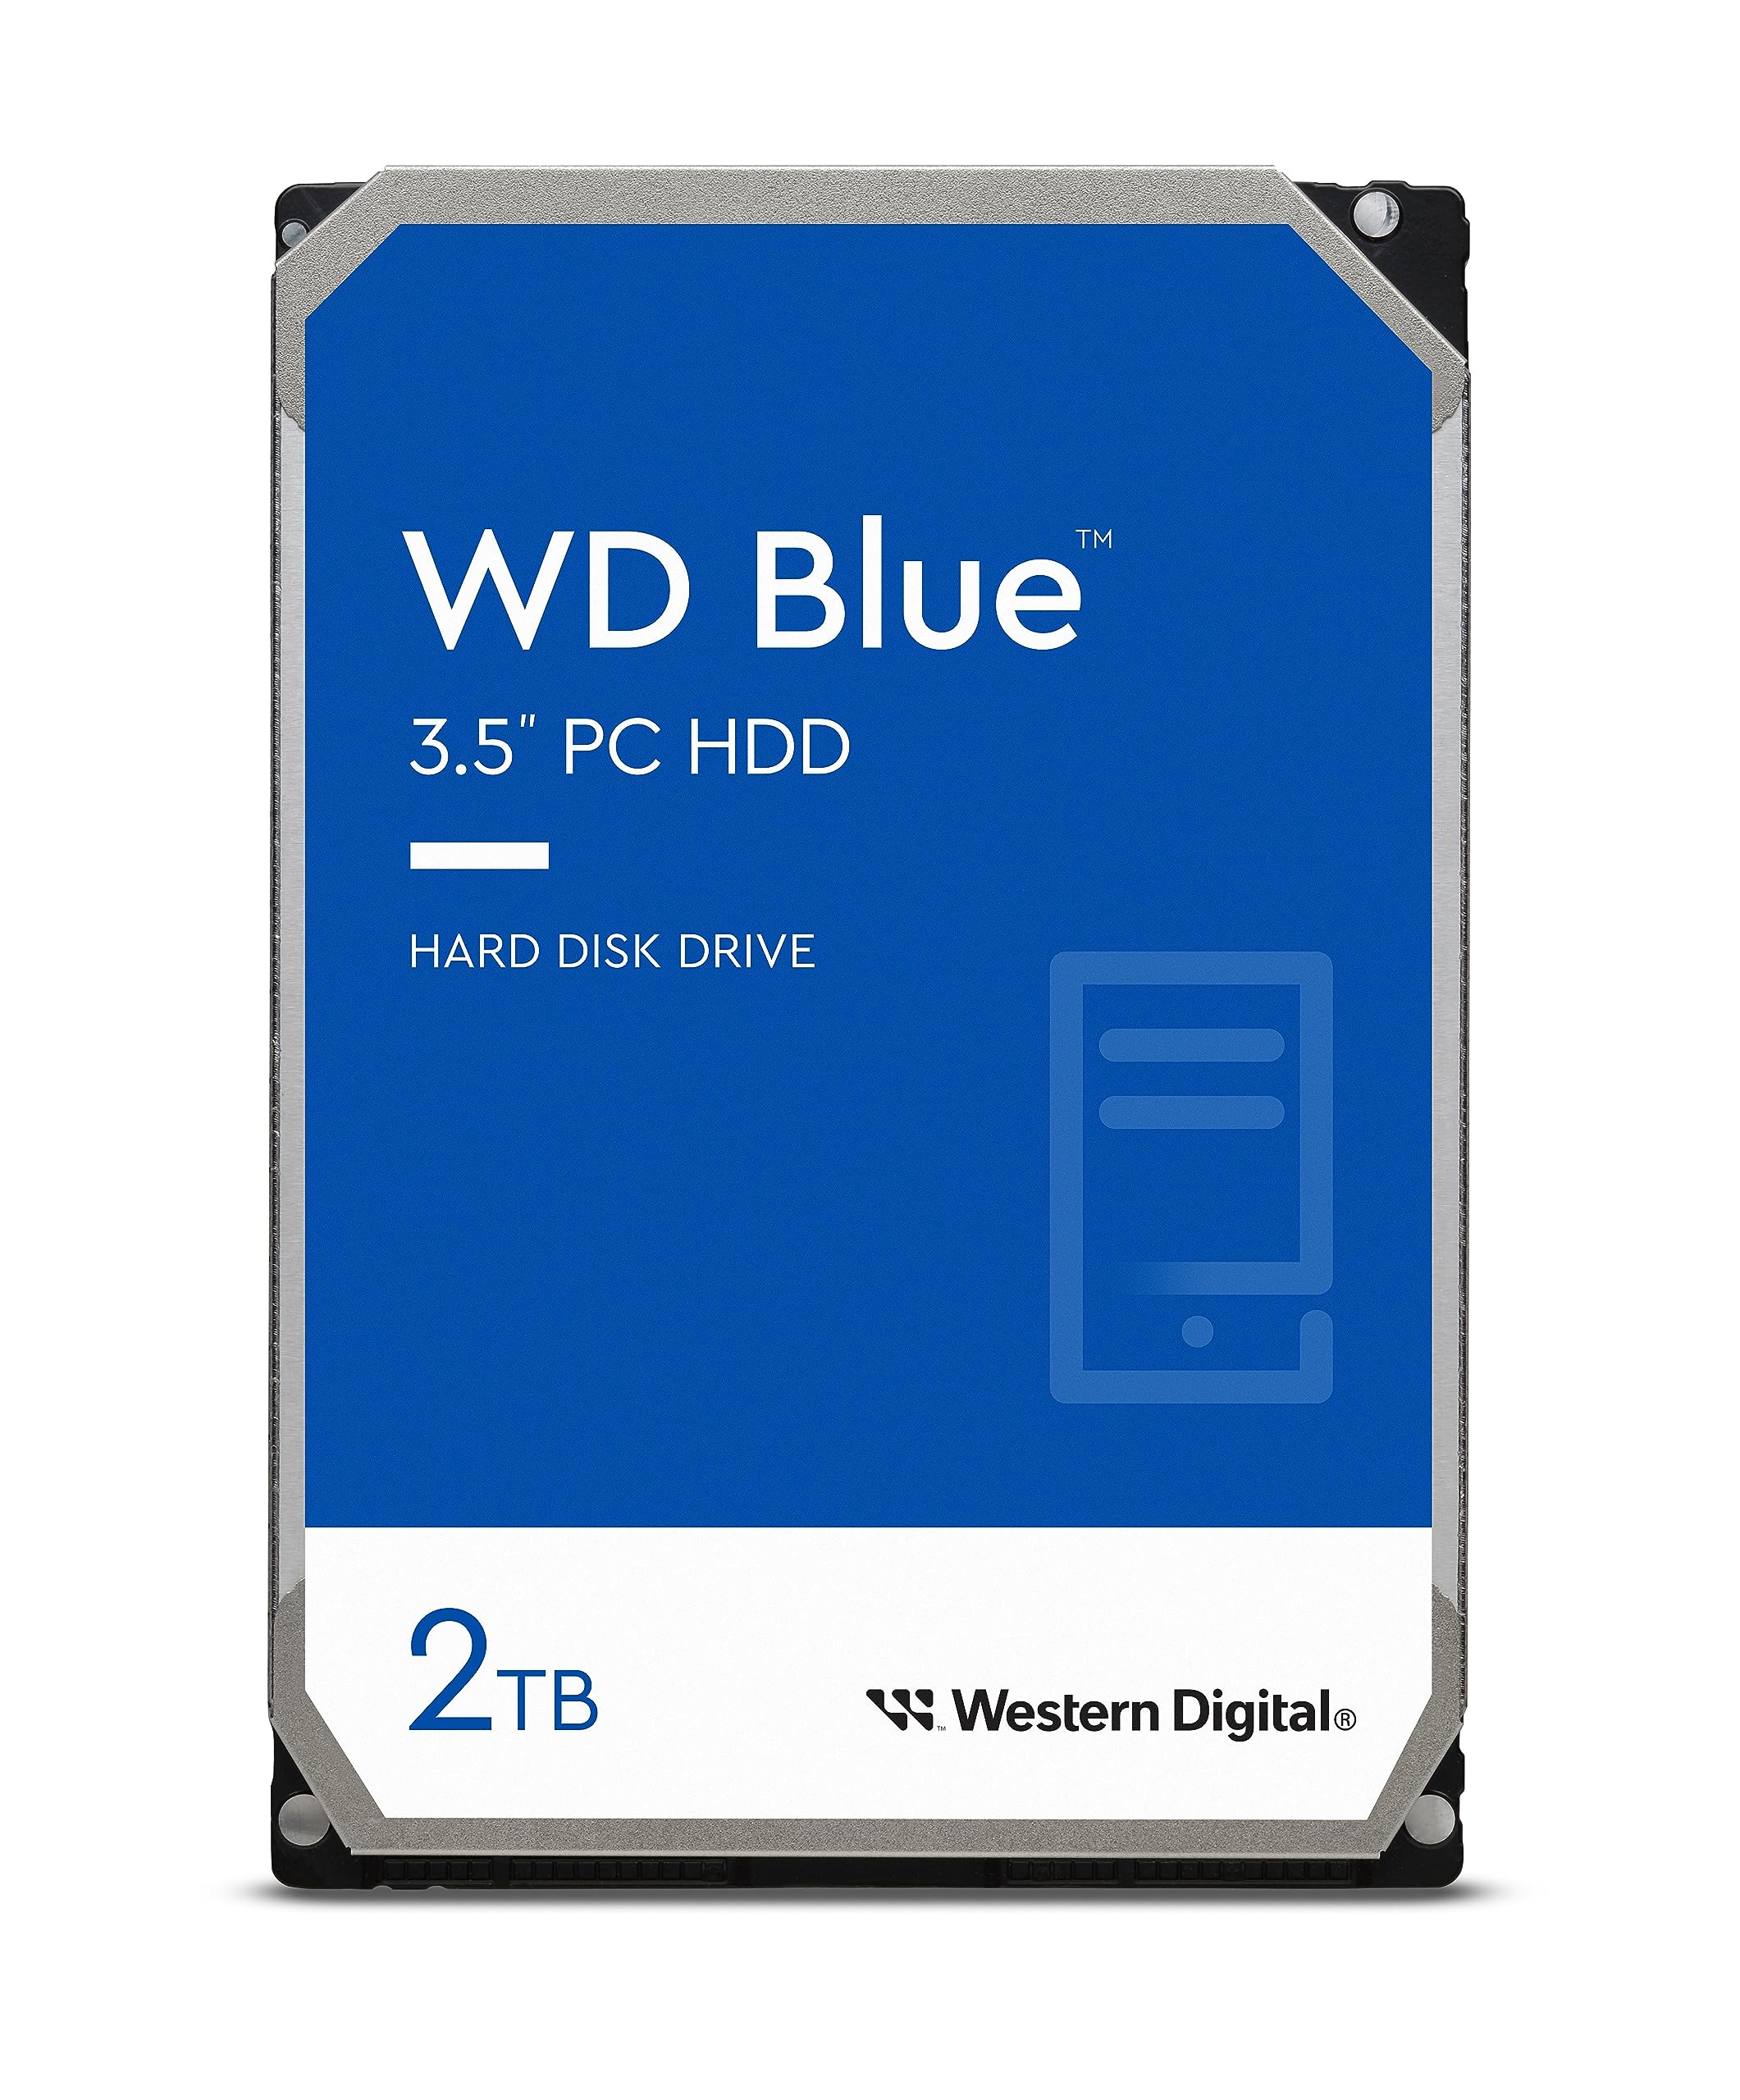 WD BLUE SATA 3.5P HDD 2TB CACHE64MB